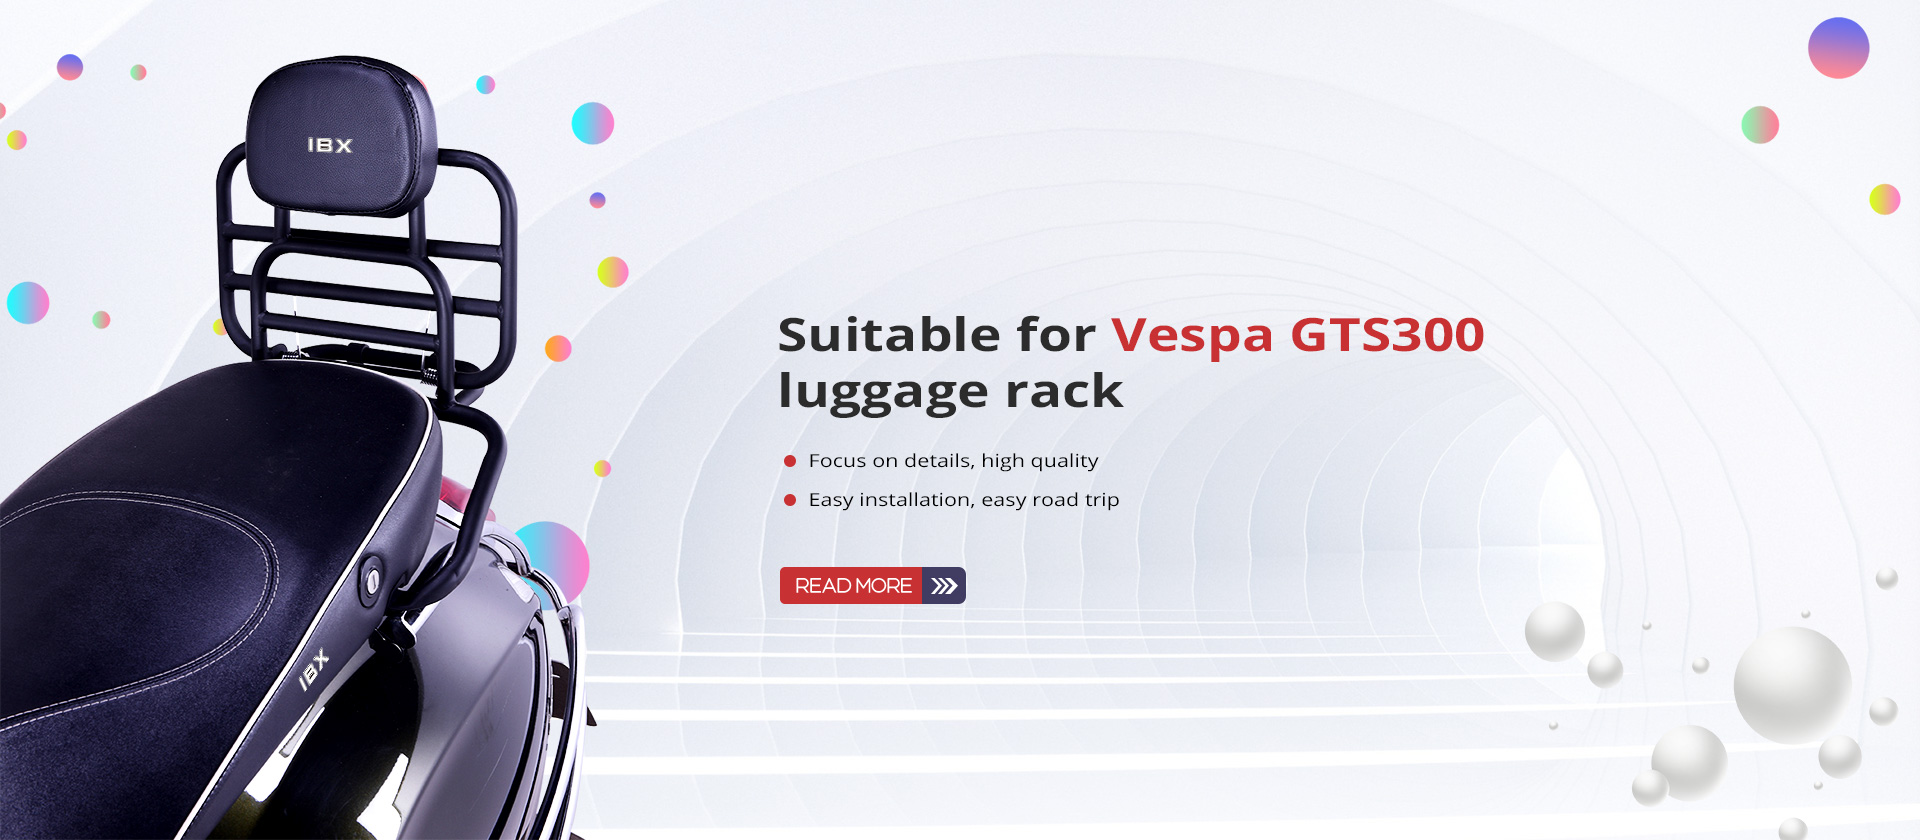 Suitable for Vespa GTS300 luggage rack